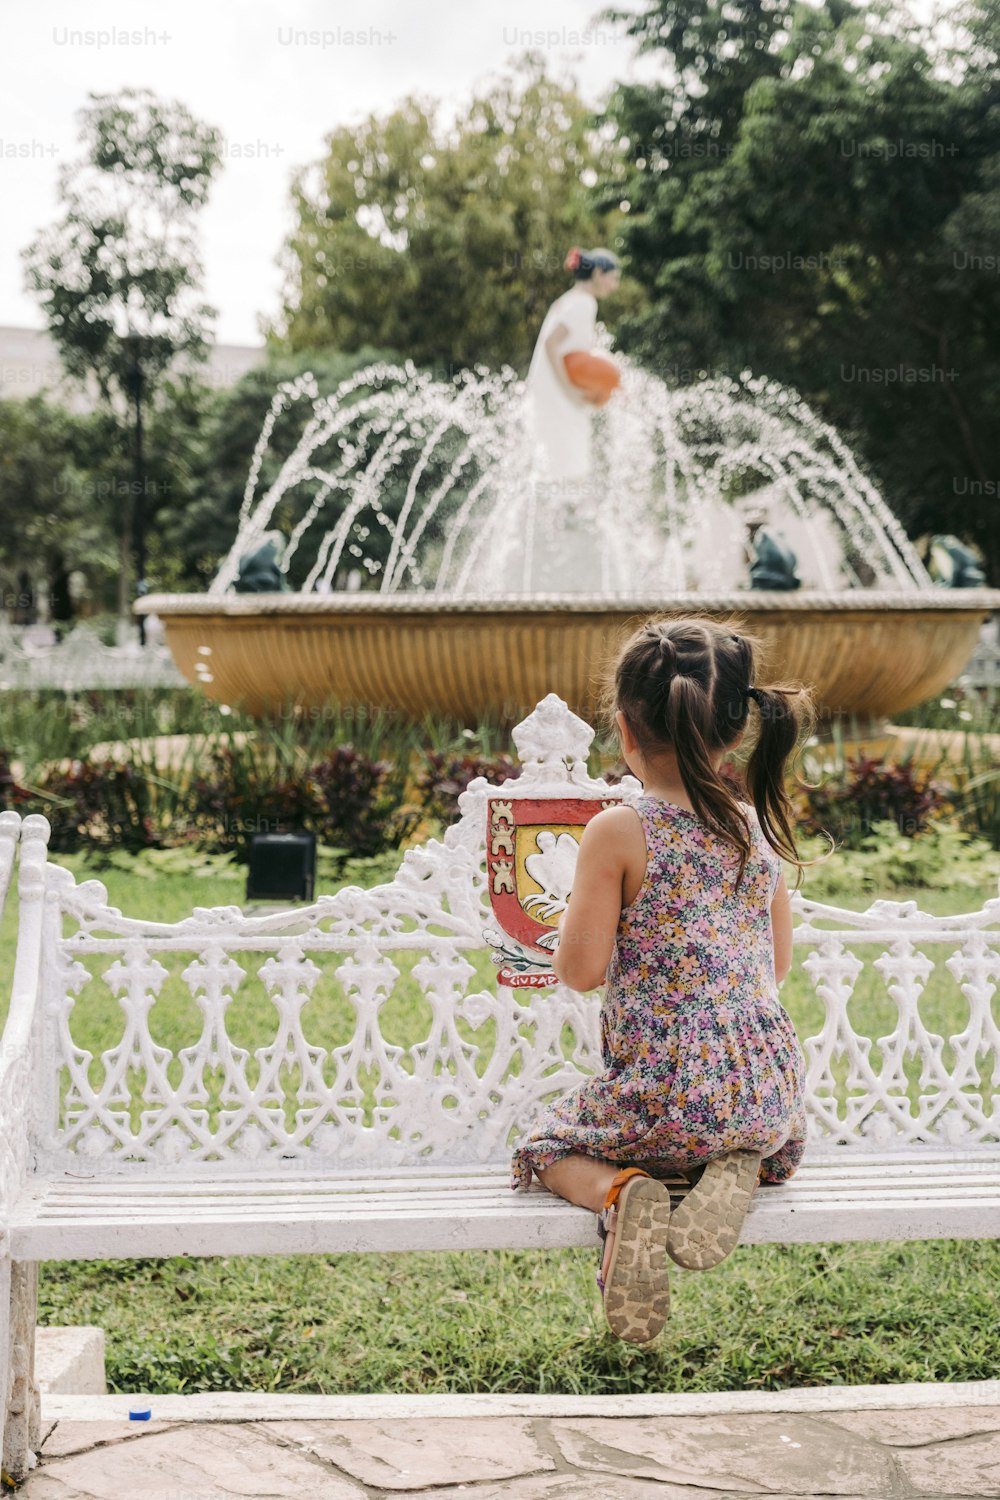 Una bambina seduta su una panchina davanti a una fontana